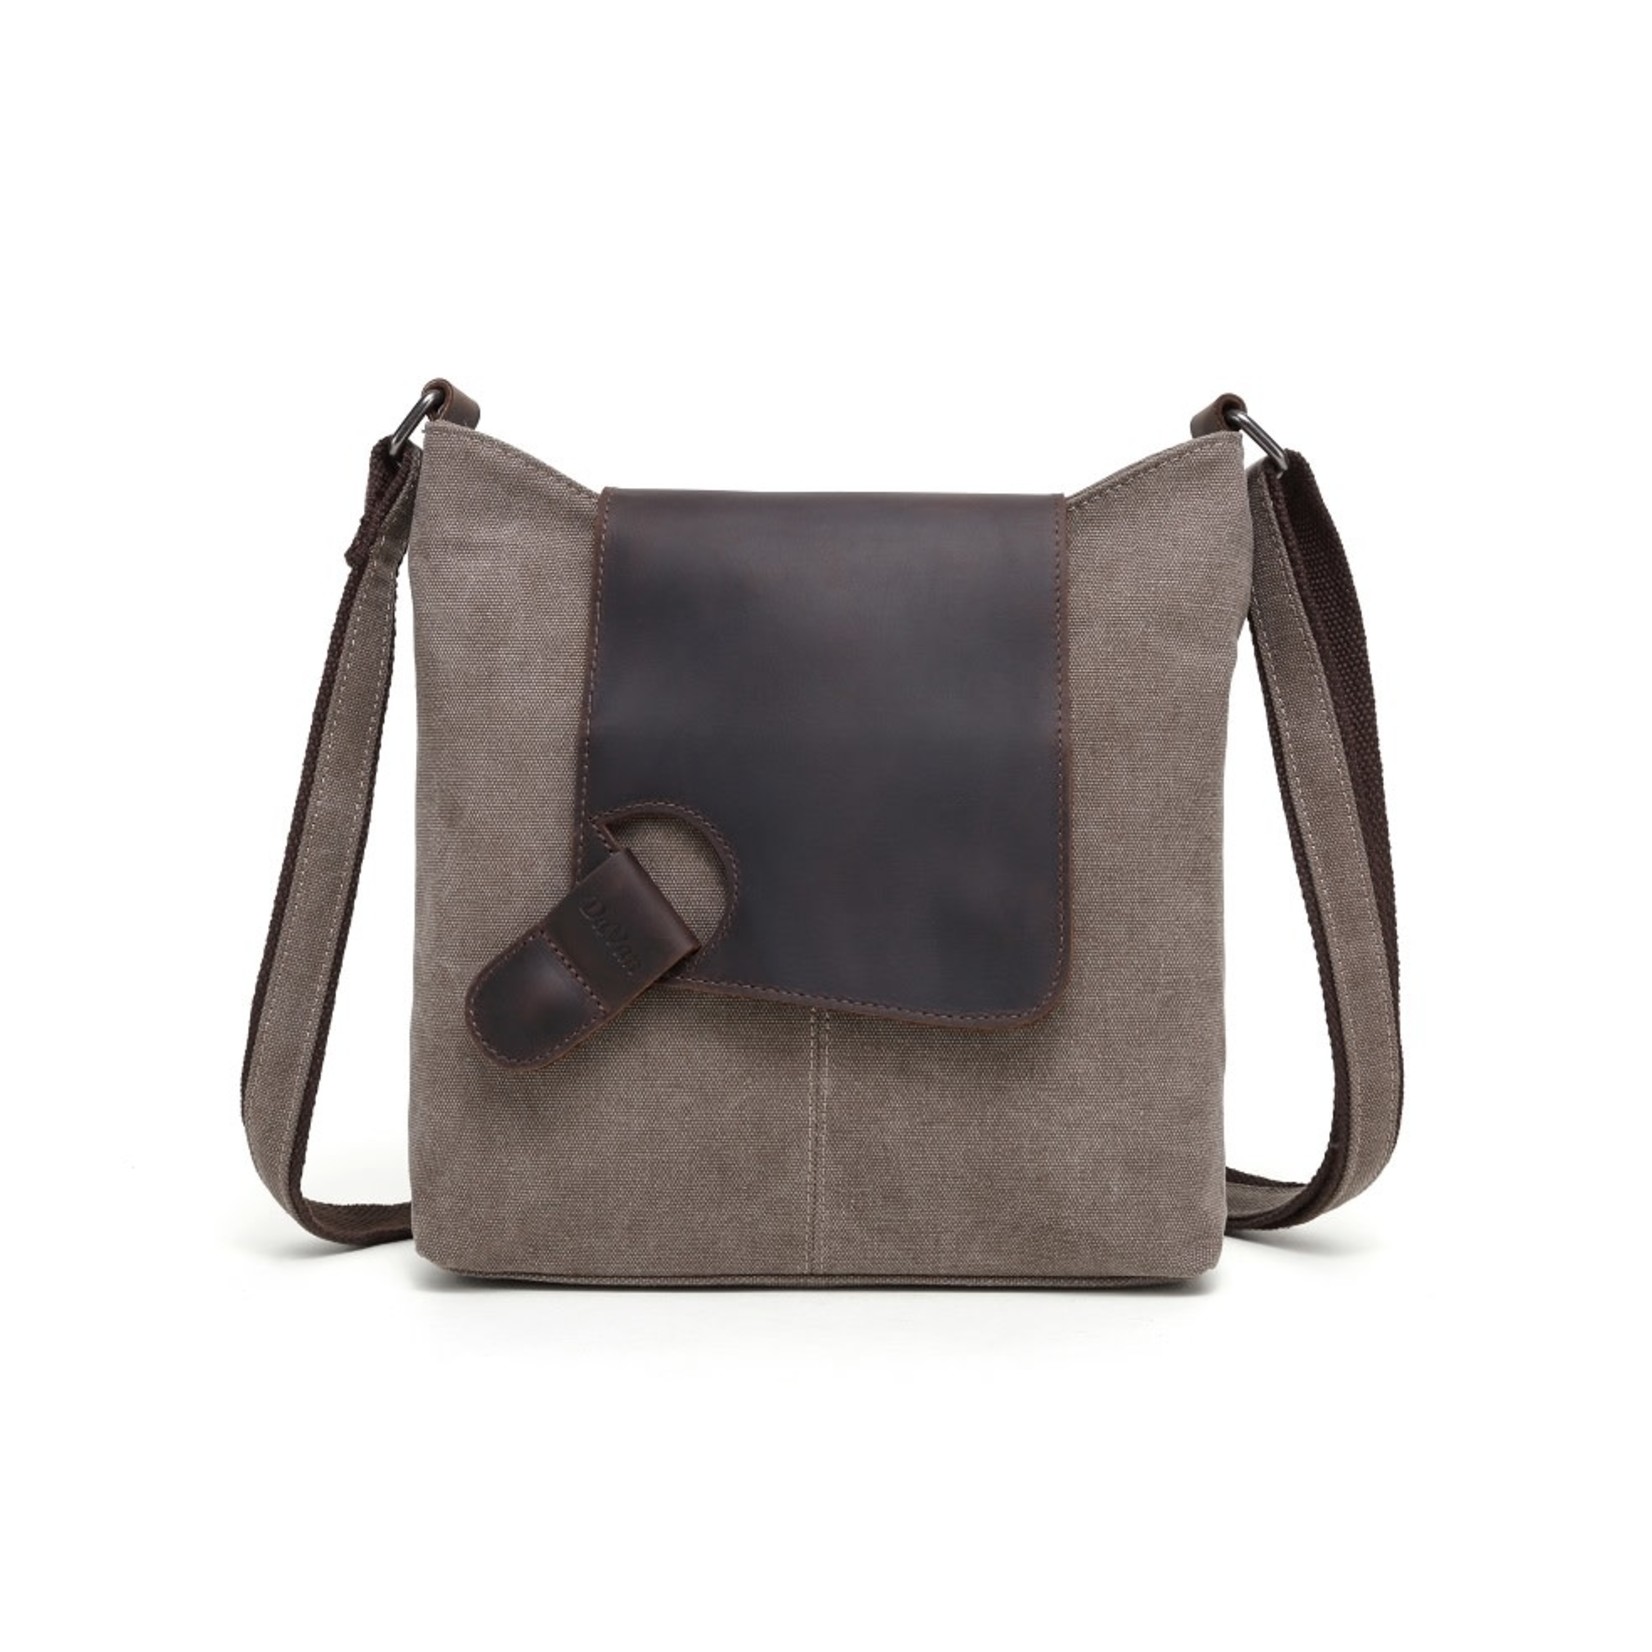 Davan Designs Bag Shoulder Brown w Leather Flap